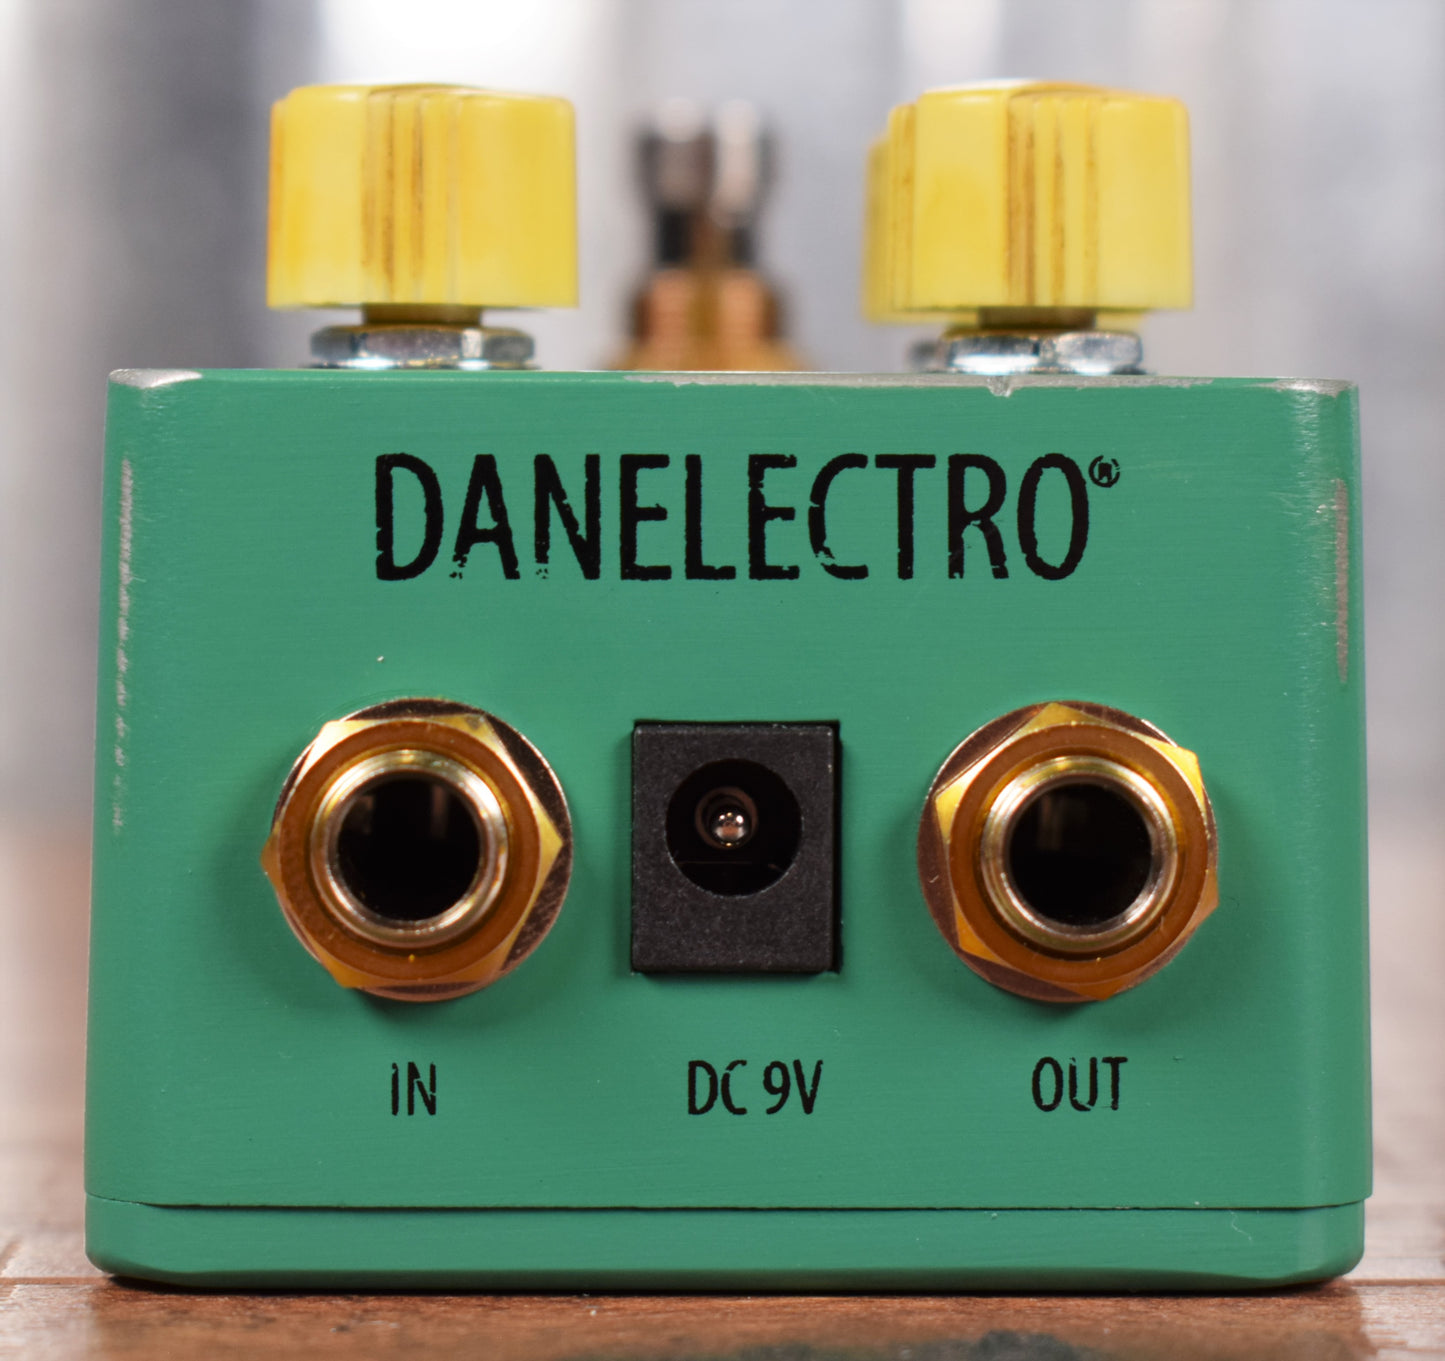 Danelectro BAC-1 Back Talk Reverse Delay Reissue Guitar Effect Pedal